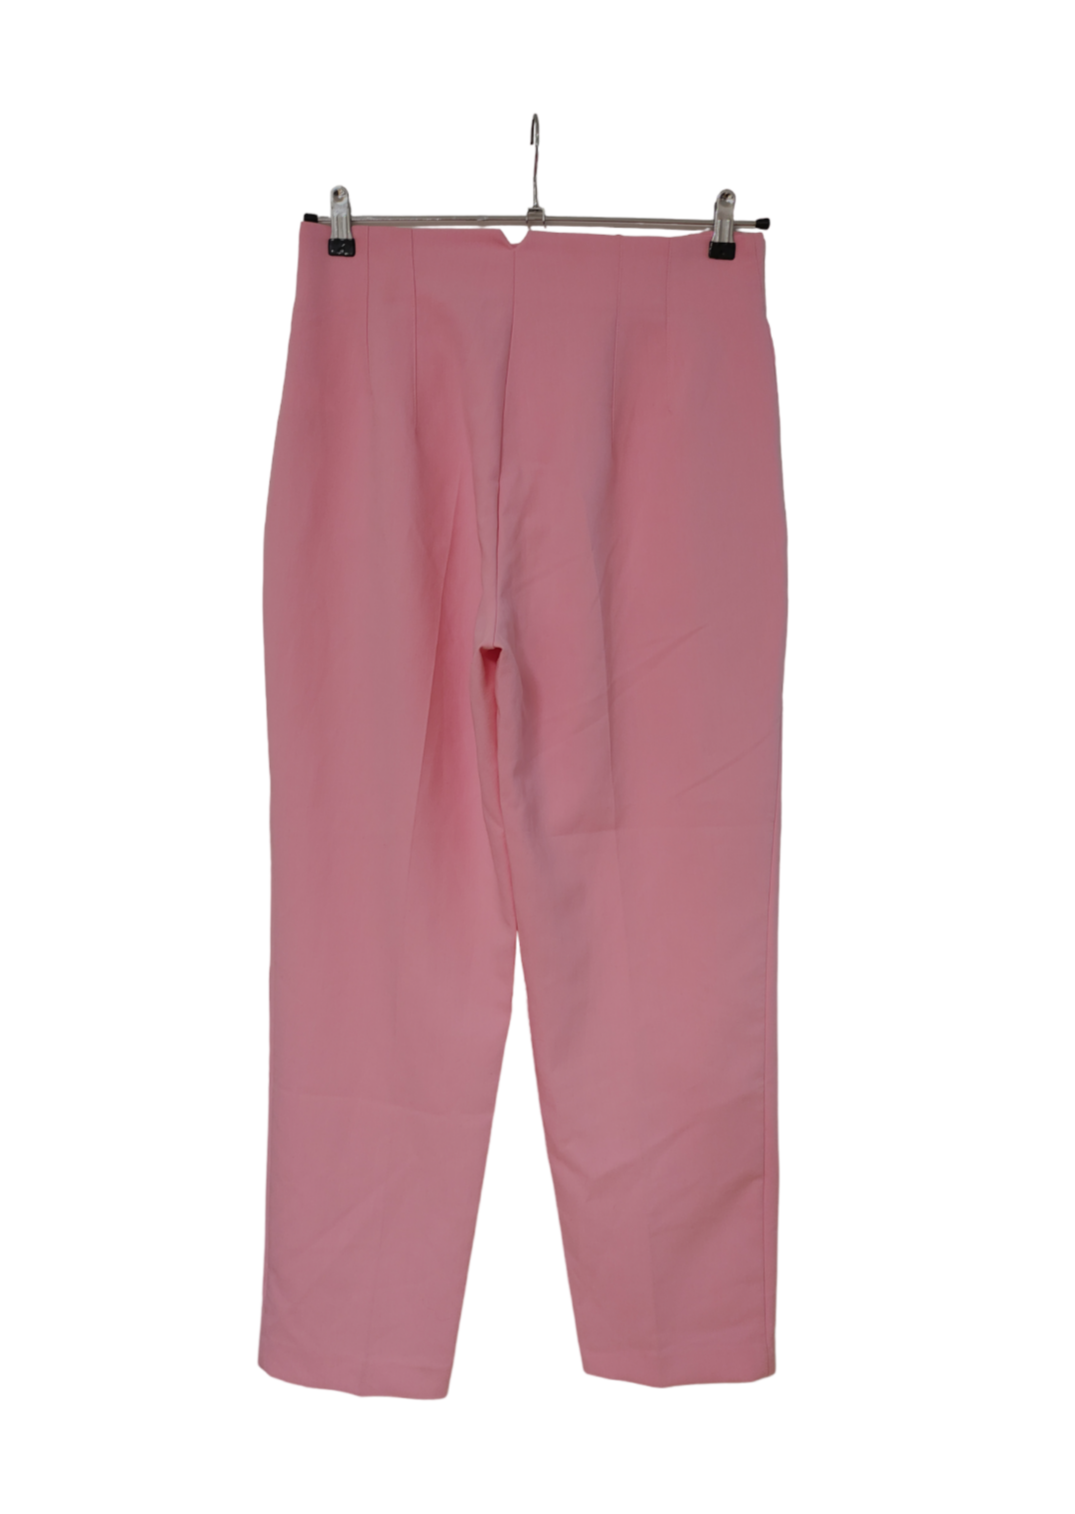 Branded Γυναικεία Παντελόνα σε Ροζ Χρώμα (Large)